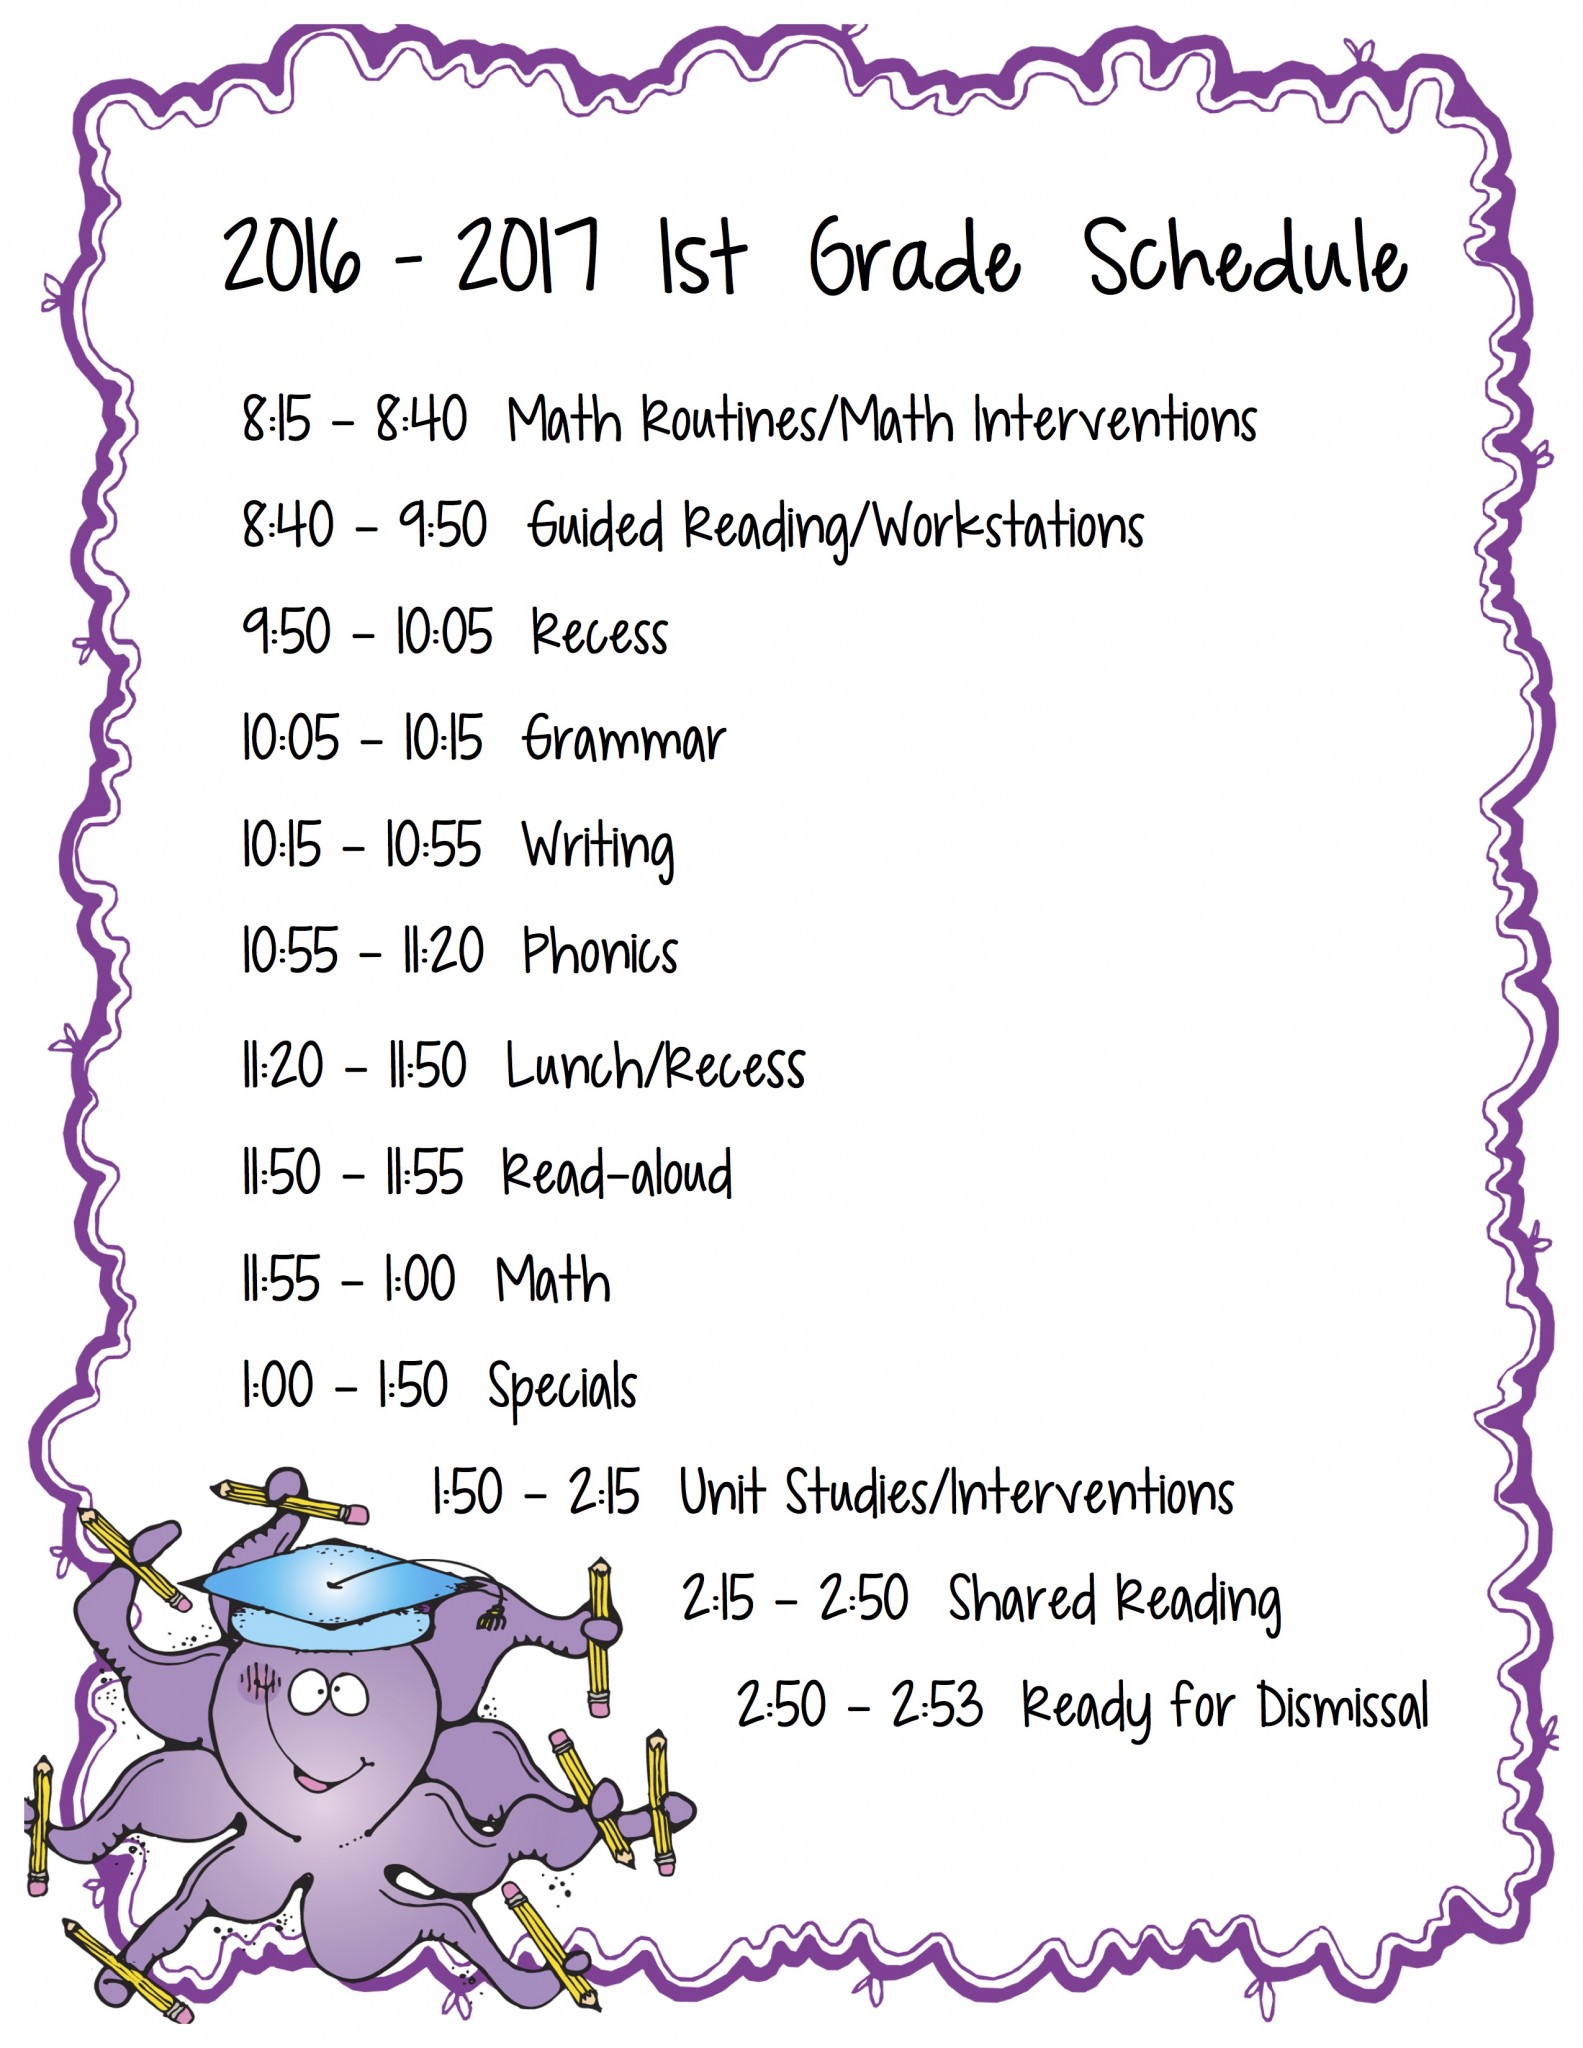 Daily Schedule | First Grade Website